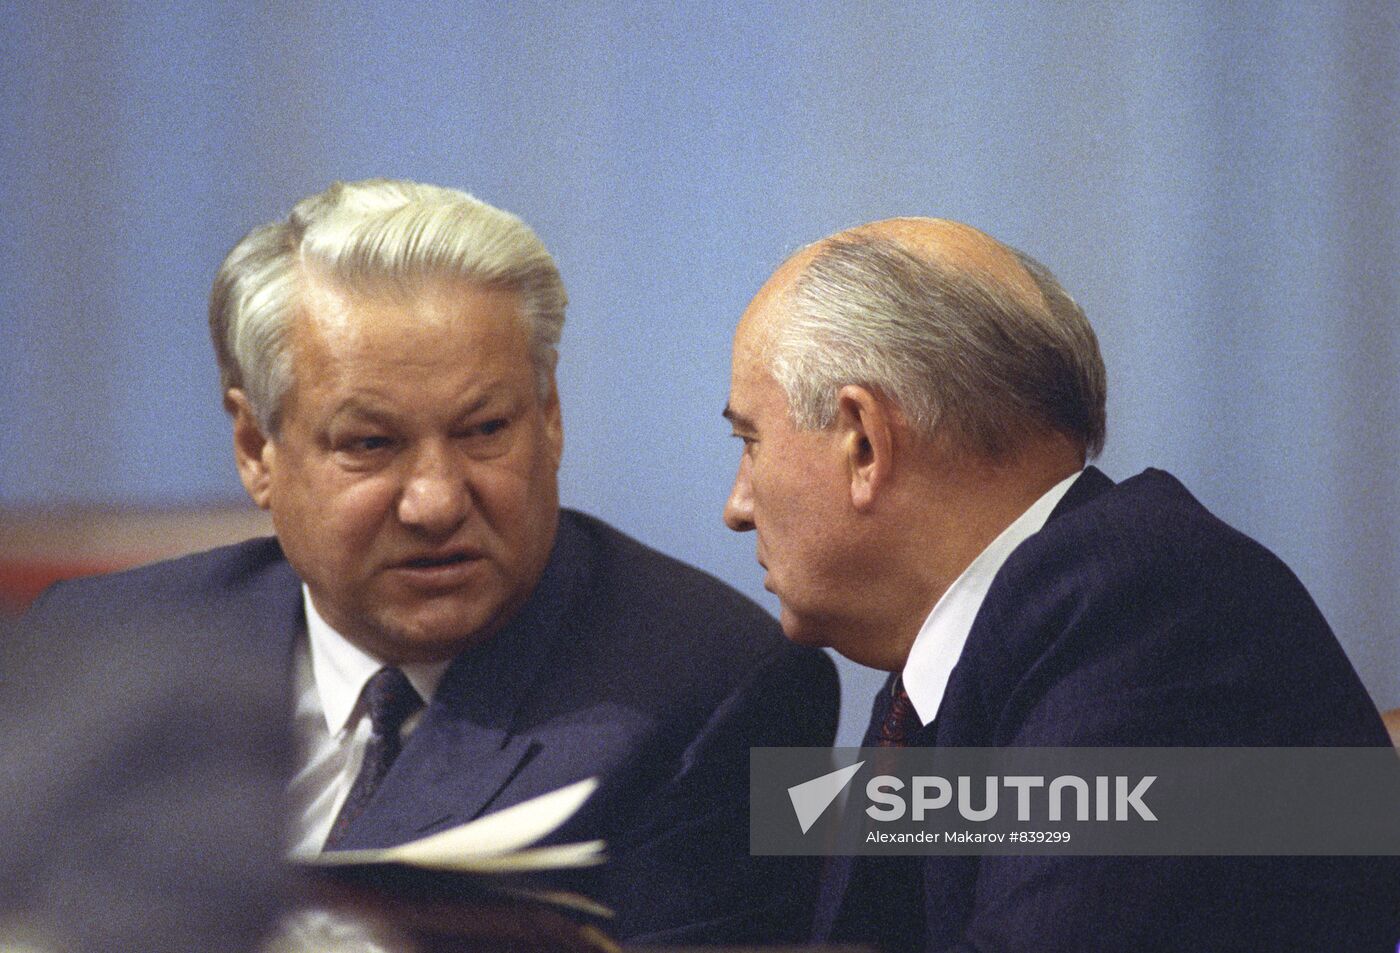 Boris Yeltsin and Mikhail Gorbachev